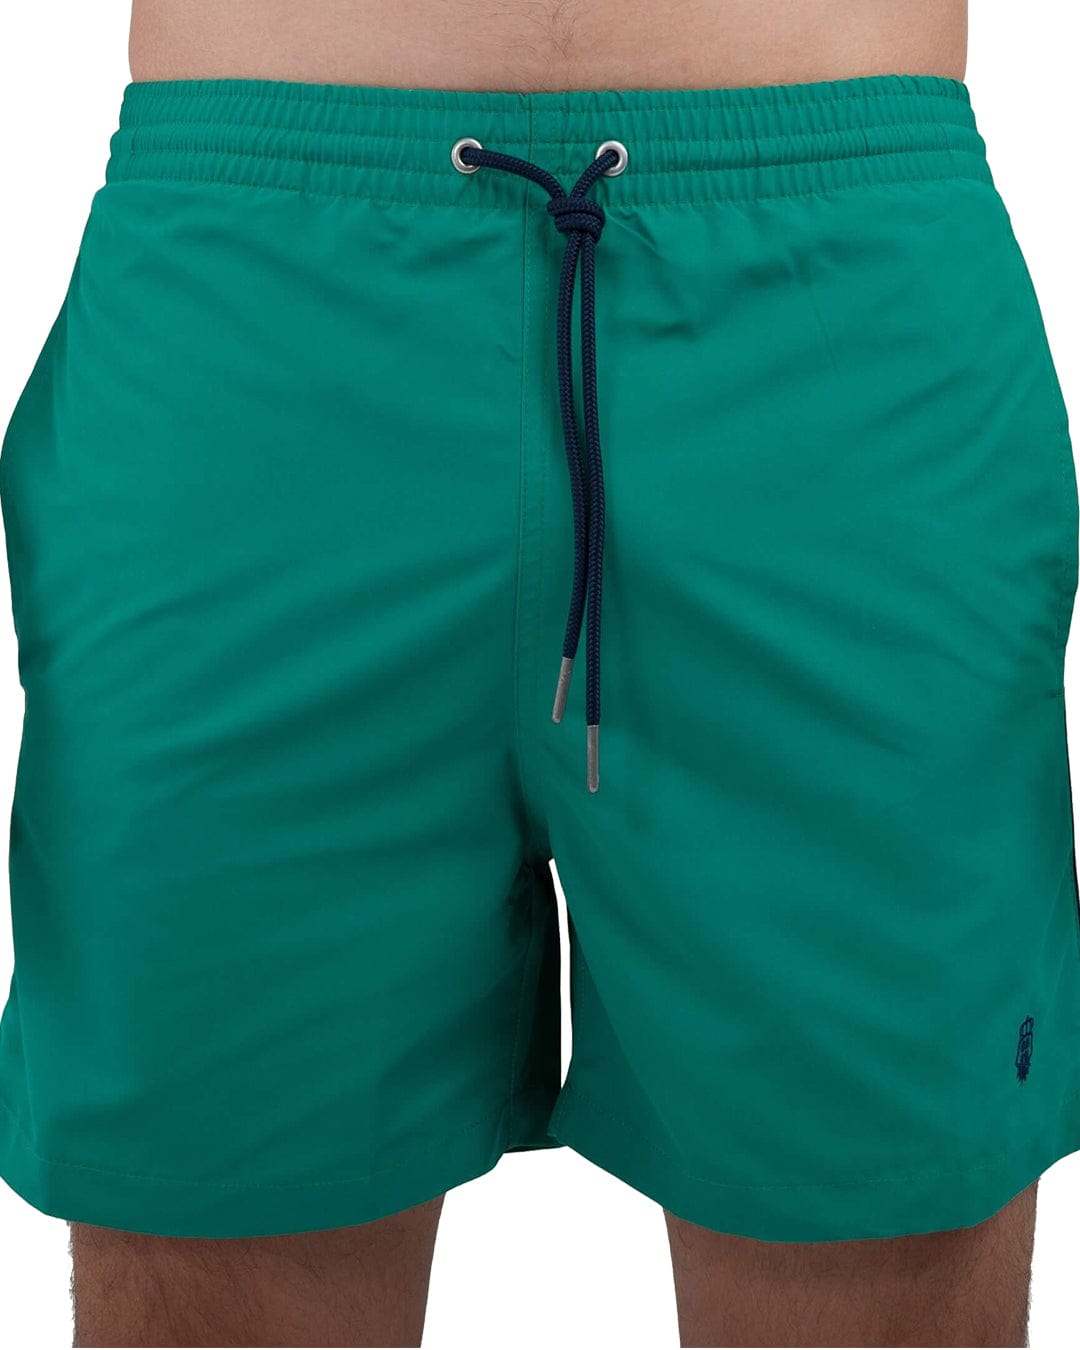 Green Piped Swim Shorts